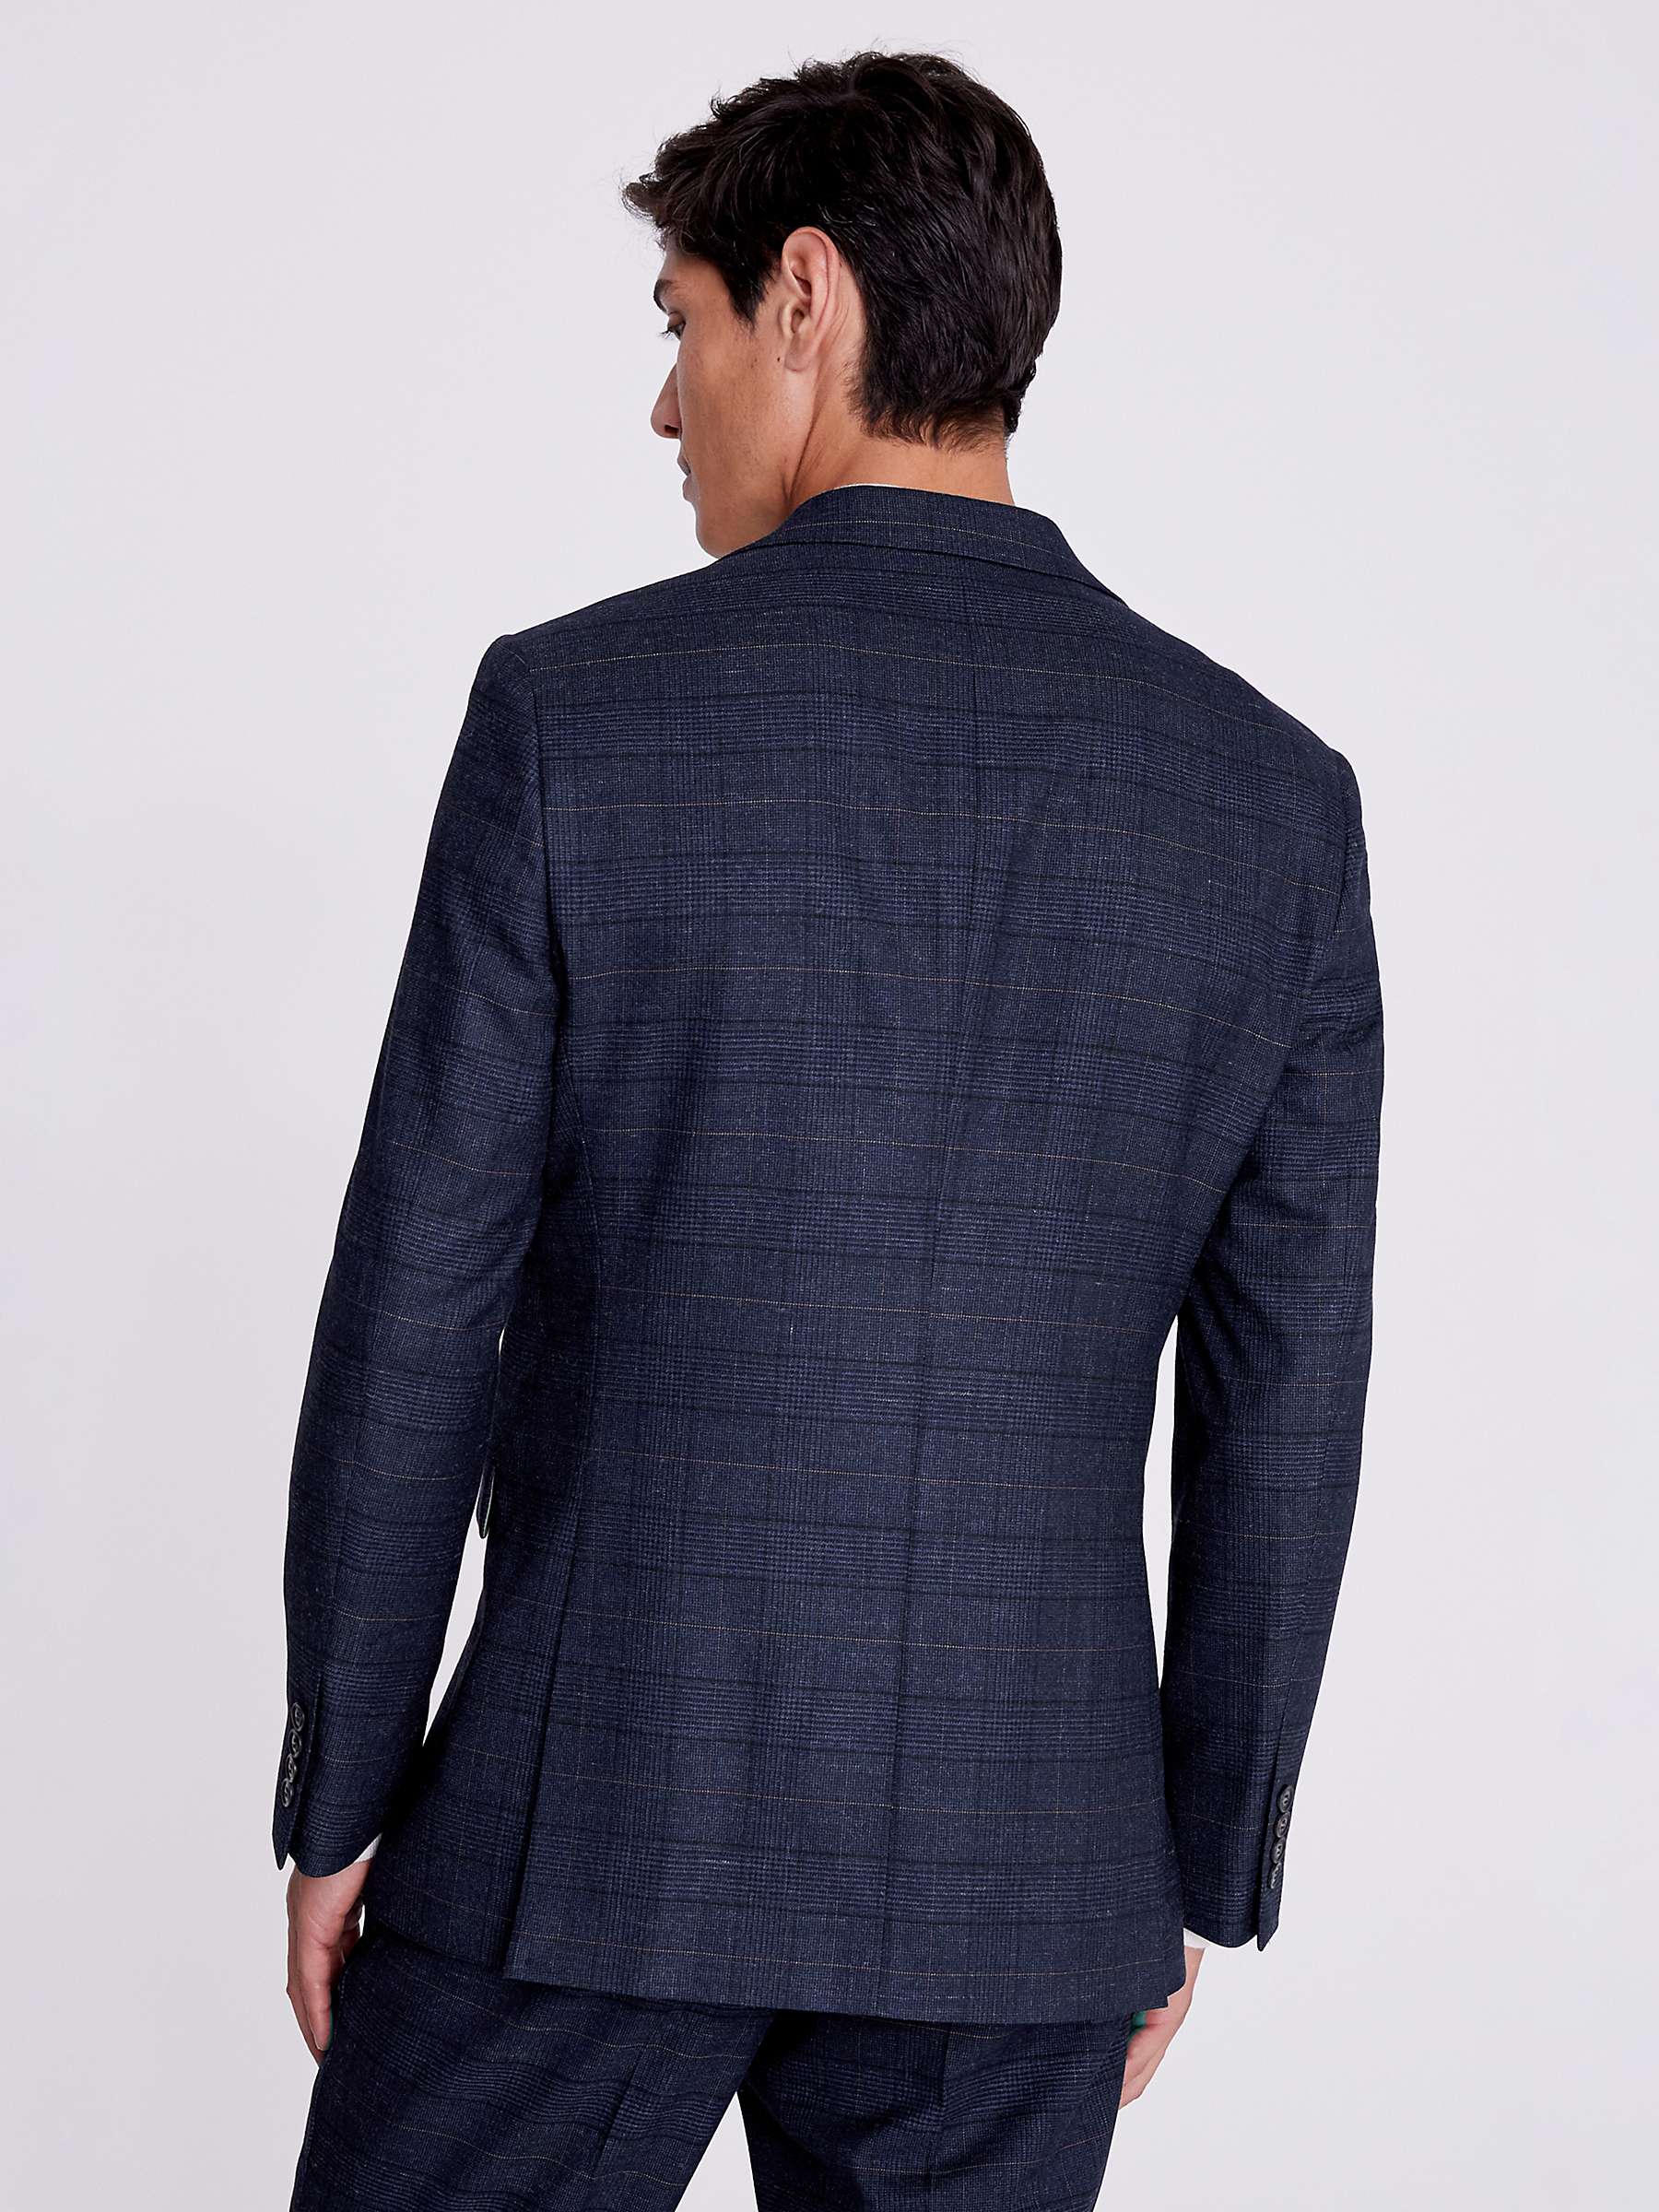 Buy Moss Regular Fit Check Suit Jacket, Navy Online at johnlewis.com